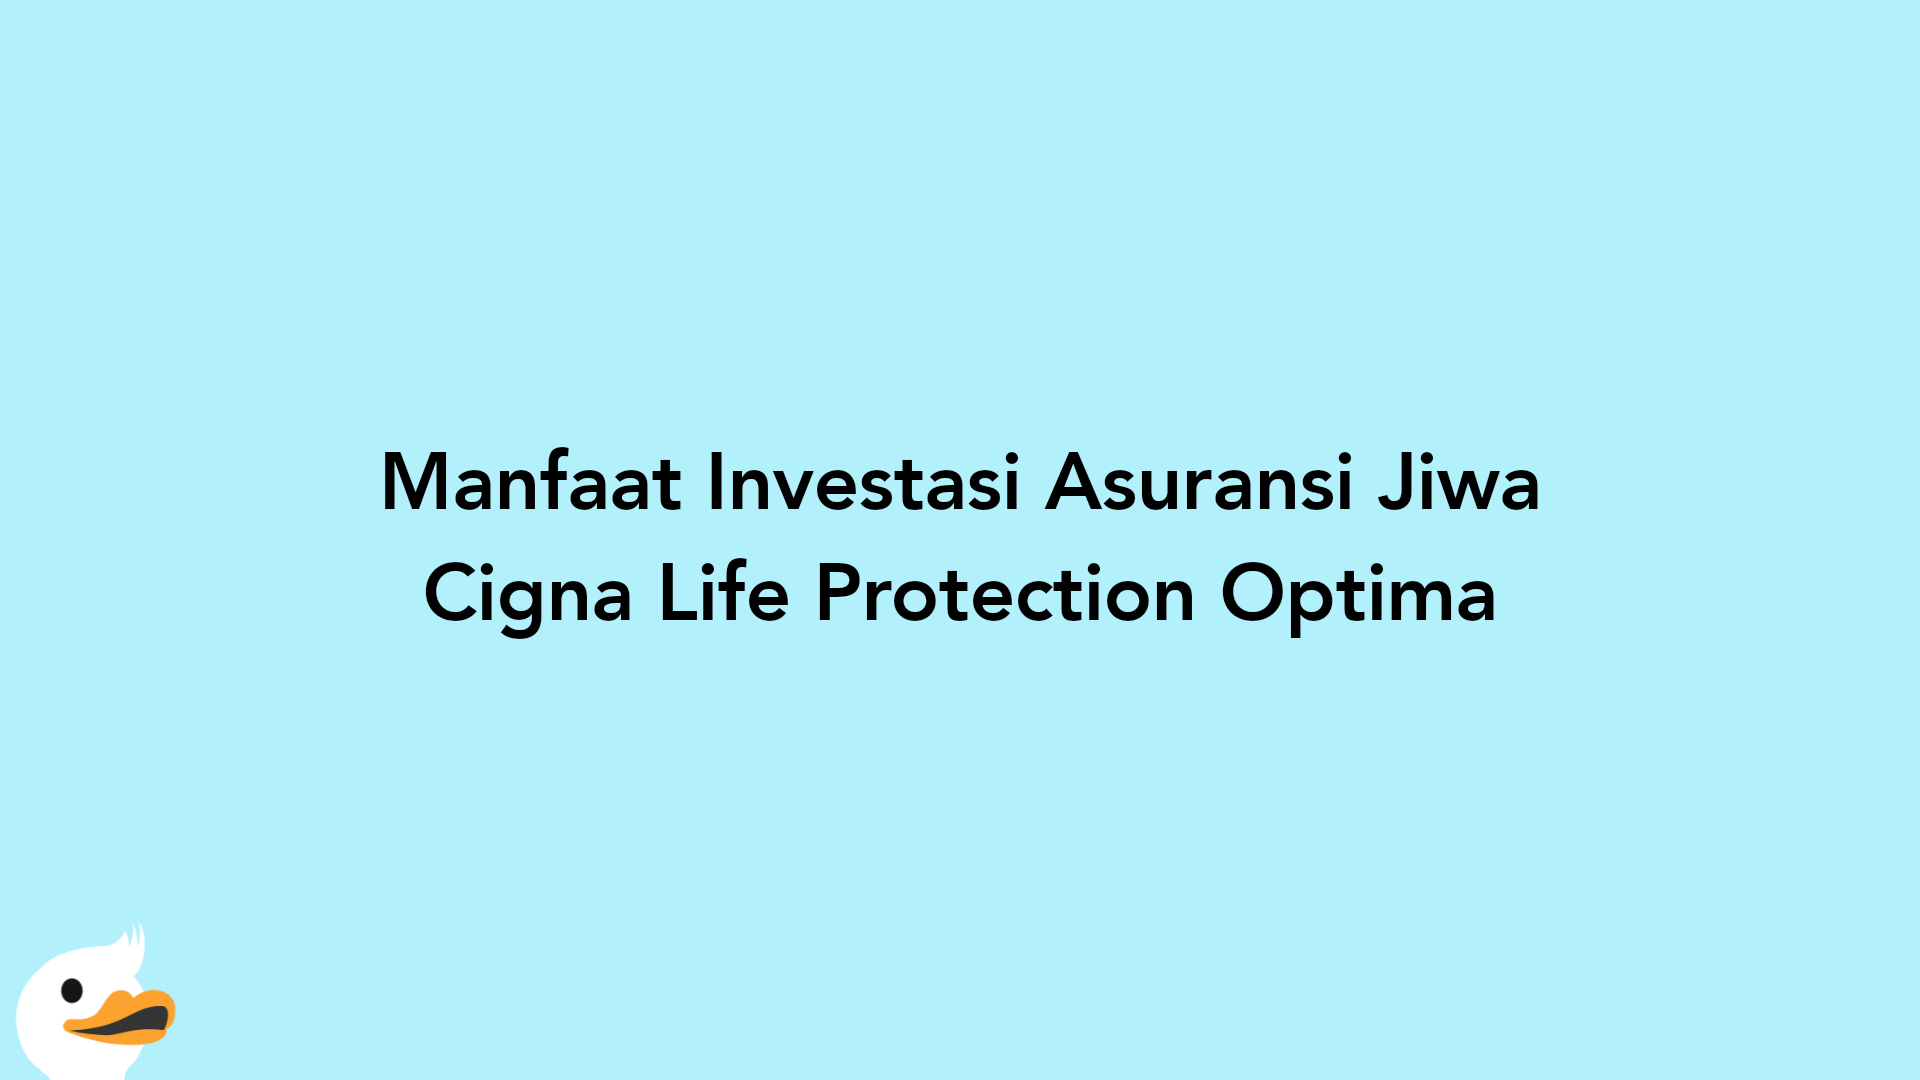 Manfaat Investasi Asuransi Jiwa Cigna Life Protection Optima